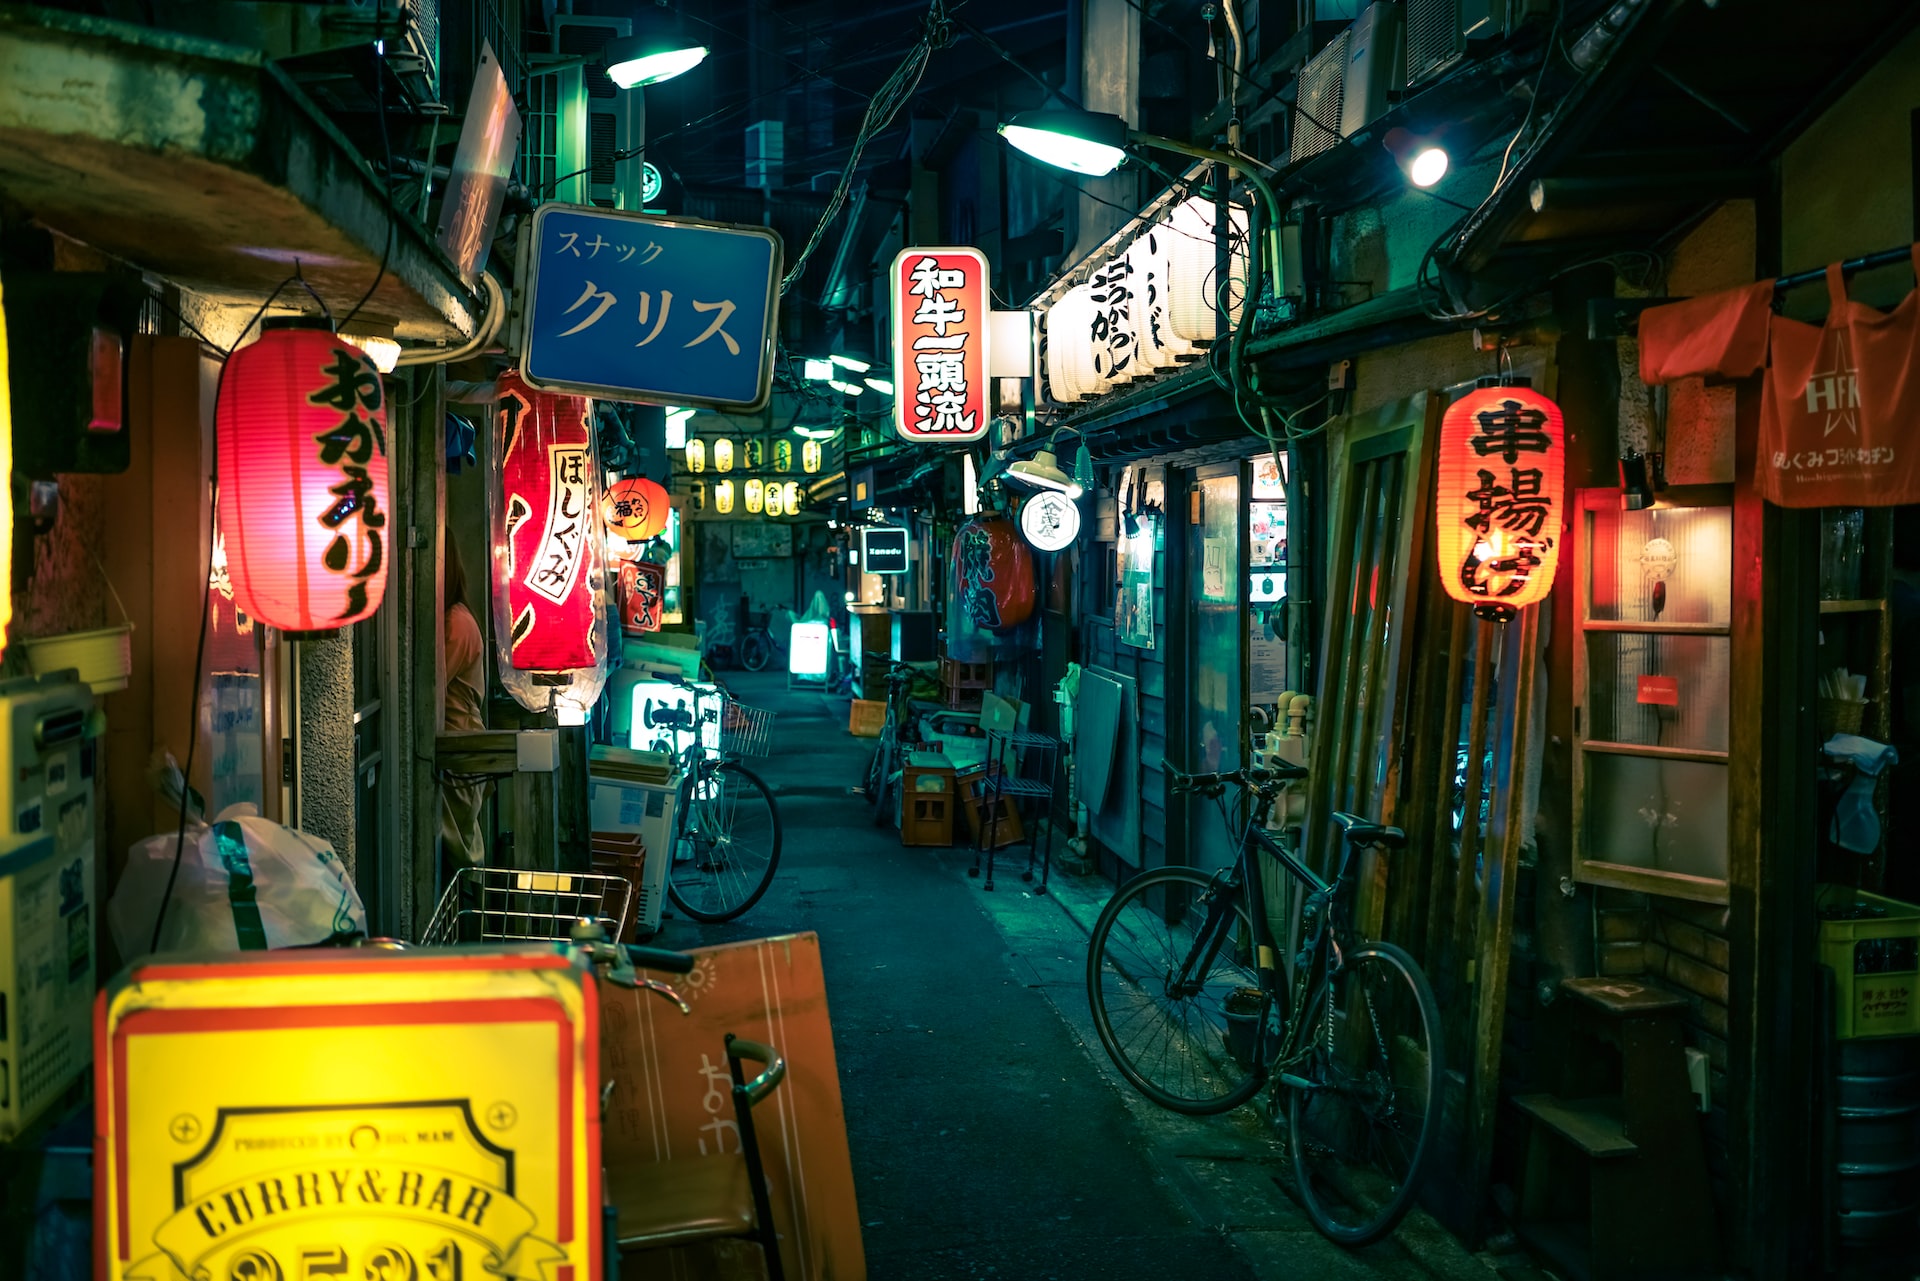 Tokyo street at night